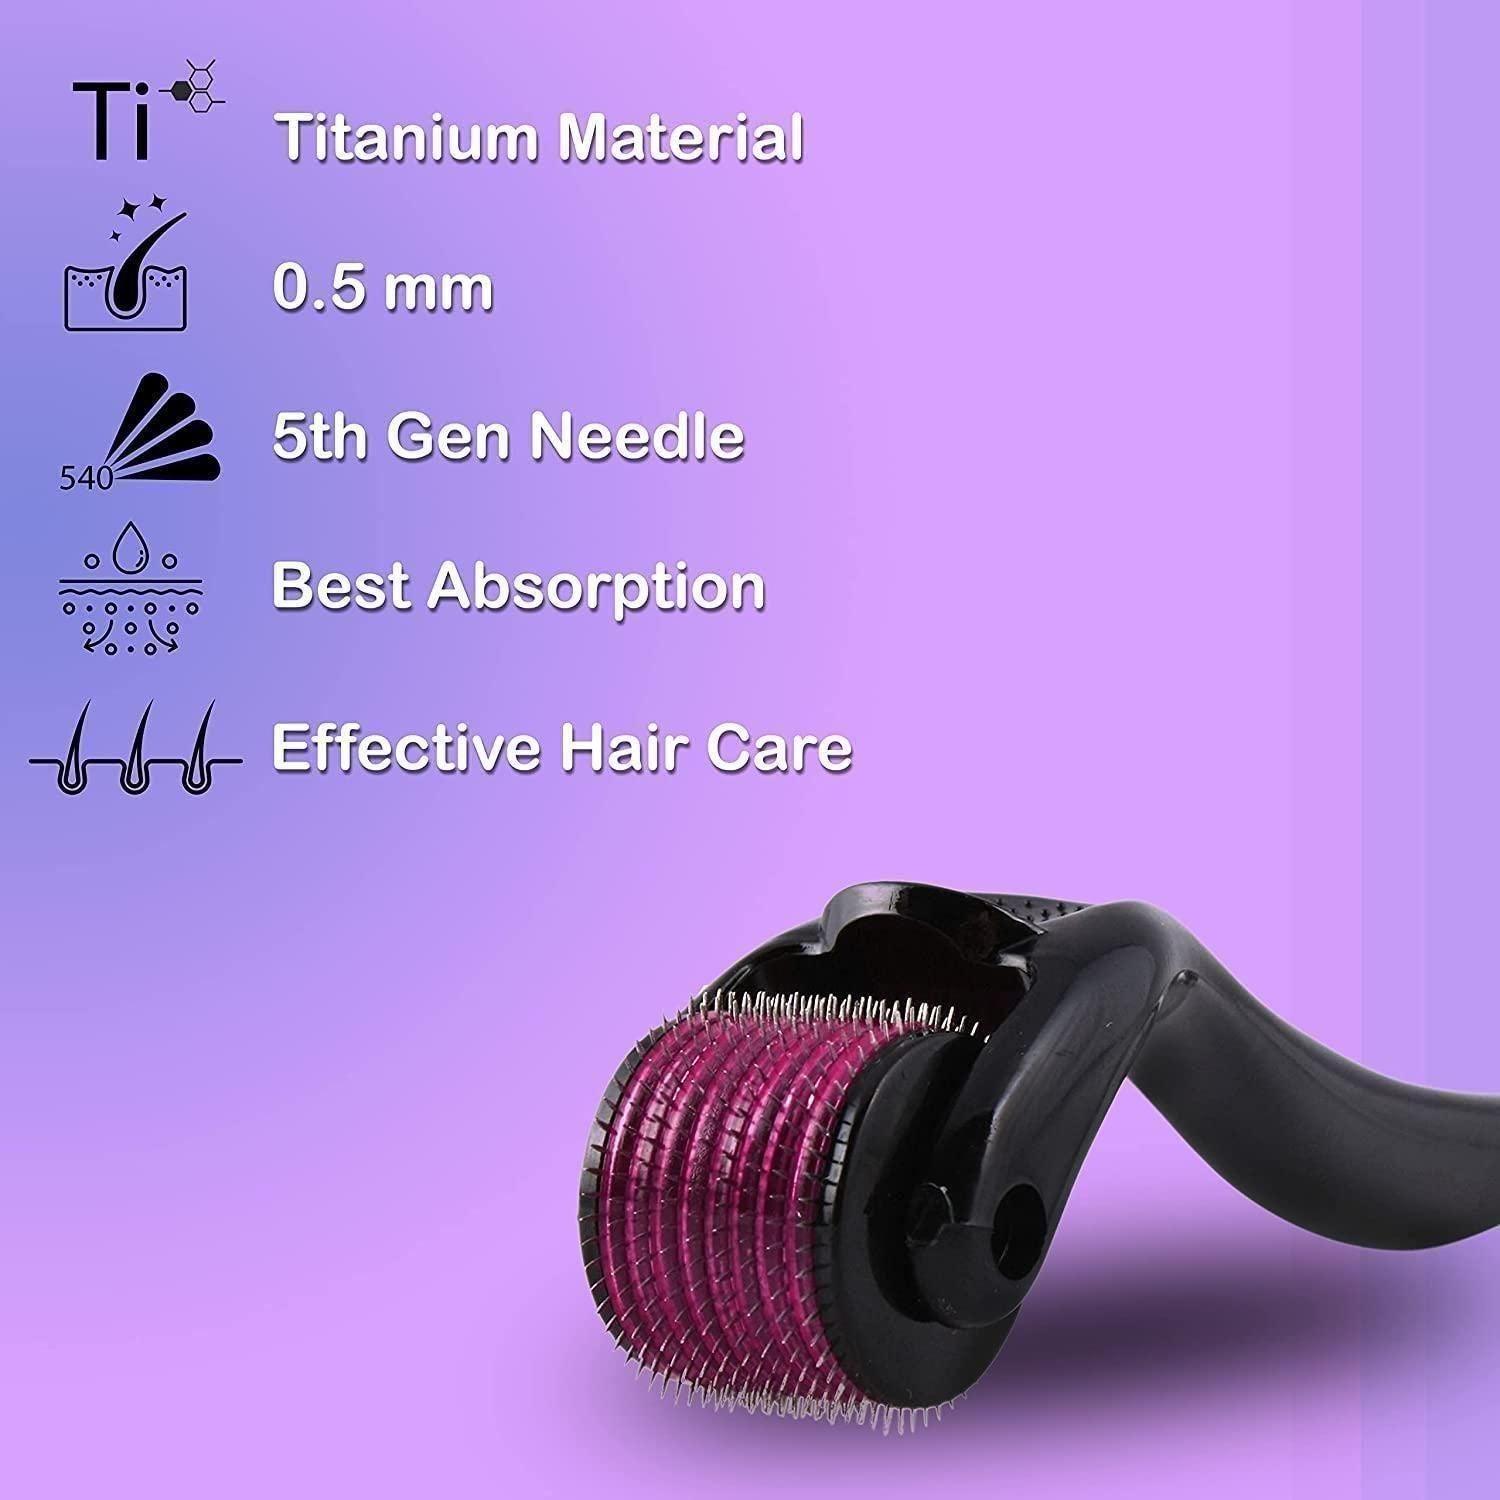 Derma Roller for hair regrowth men/women 0.5 mm - GadgetPlus